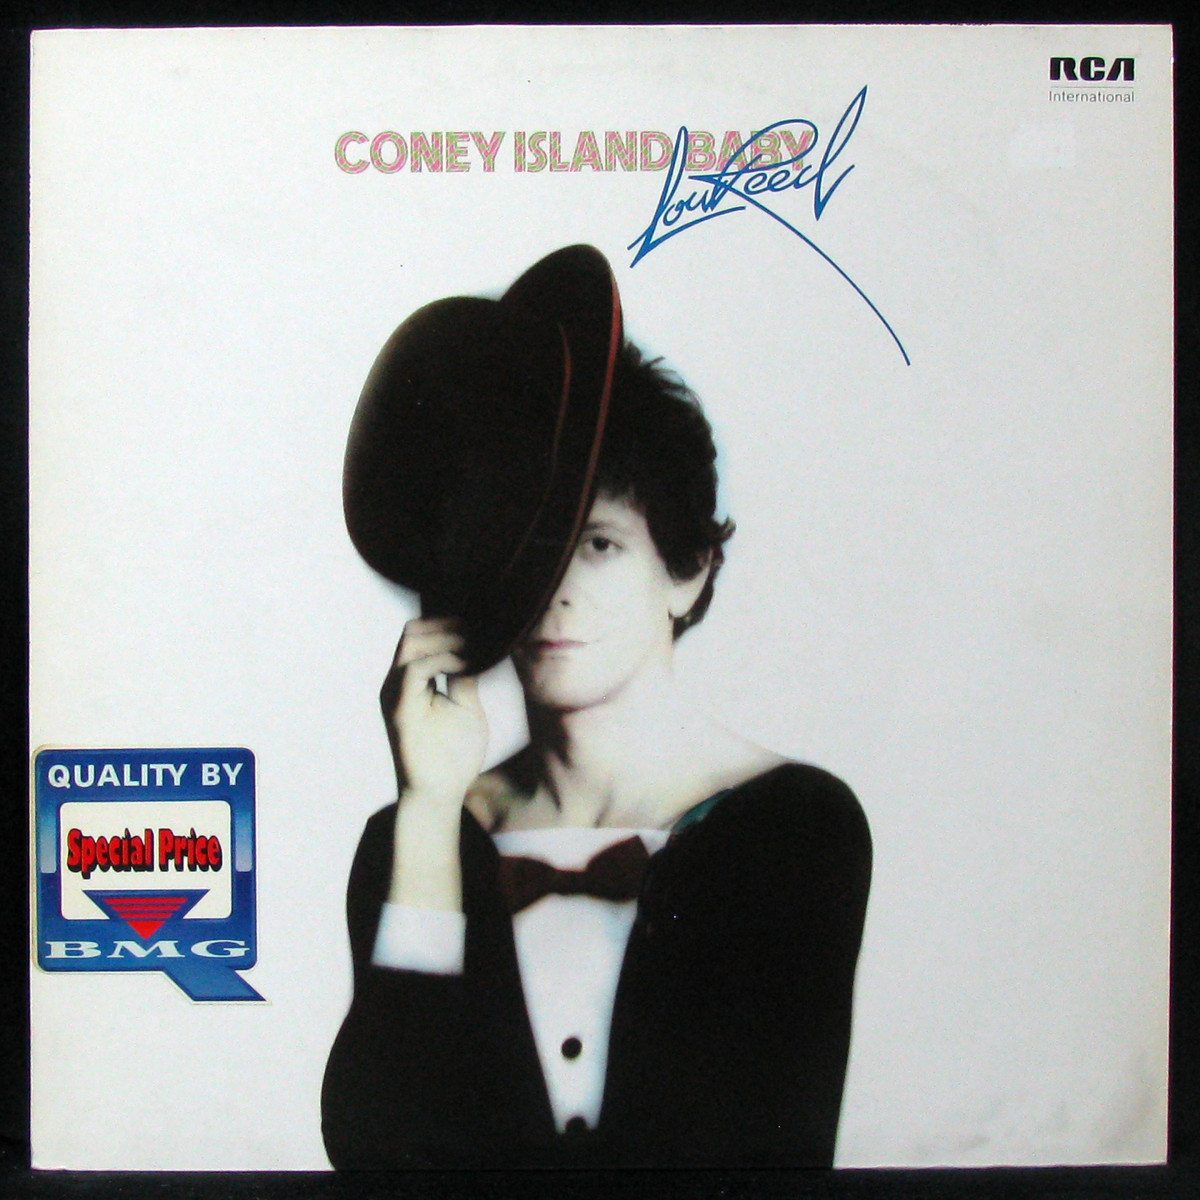 LP Lou Reed — Coney Island Baby фото